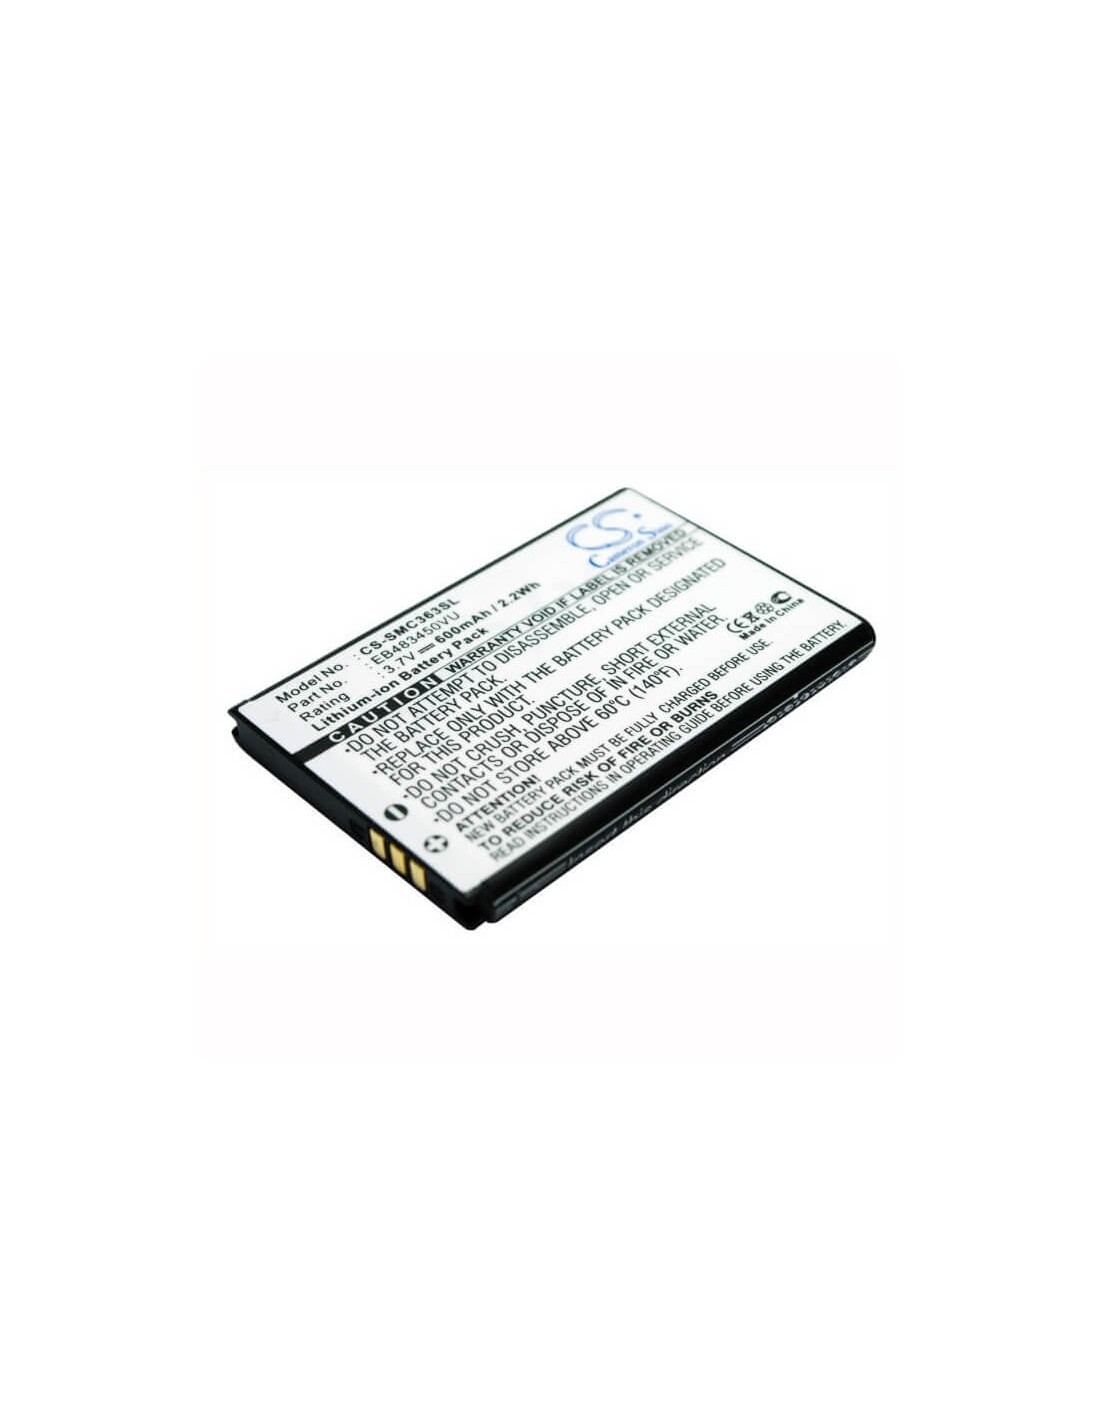 Battery for Samsung GT-C3630, GT-C3630C, GT-S5350 3.7V, 600mAh - 2.22Wh